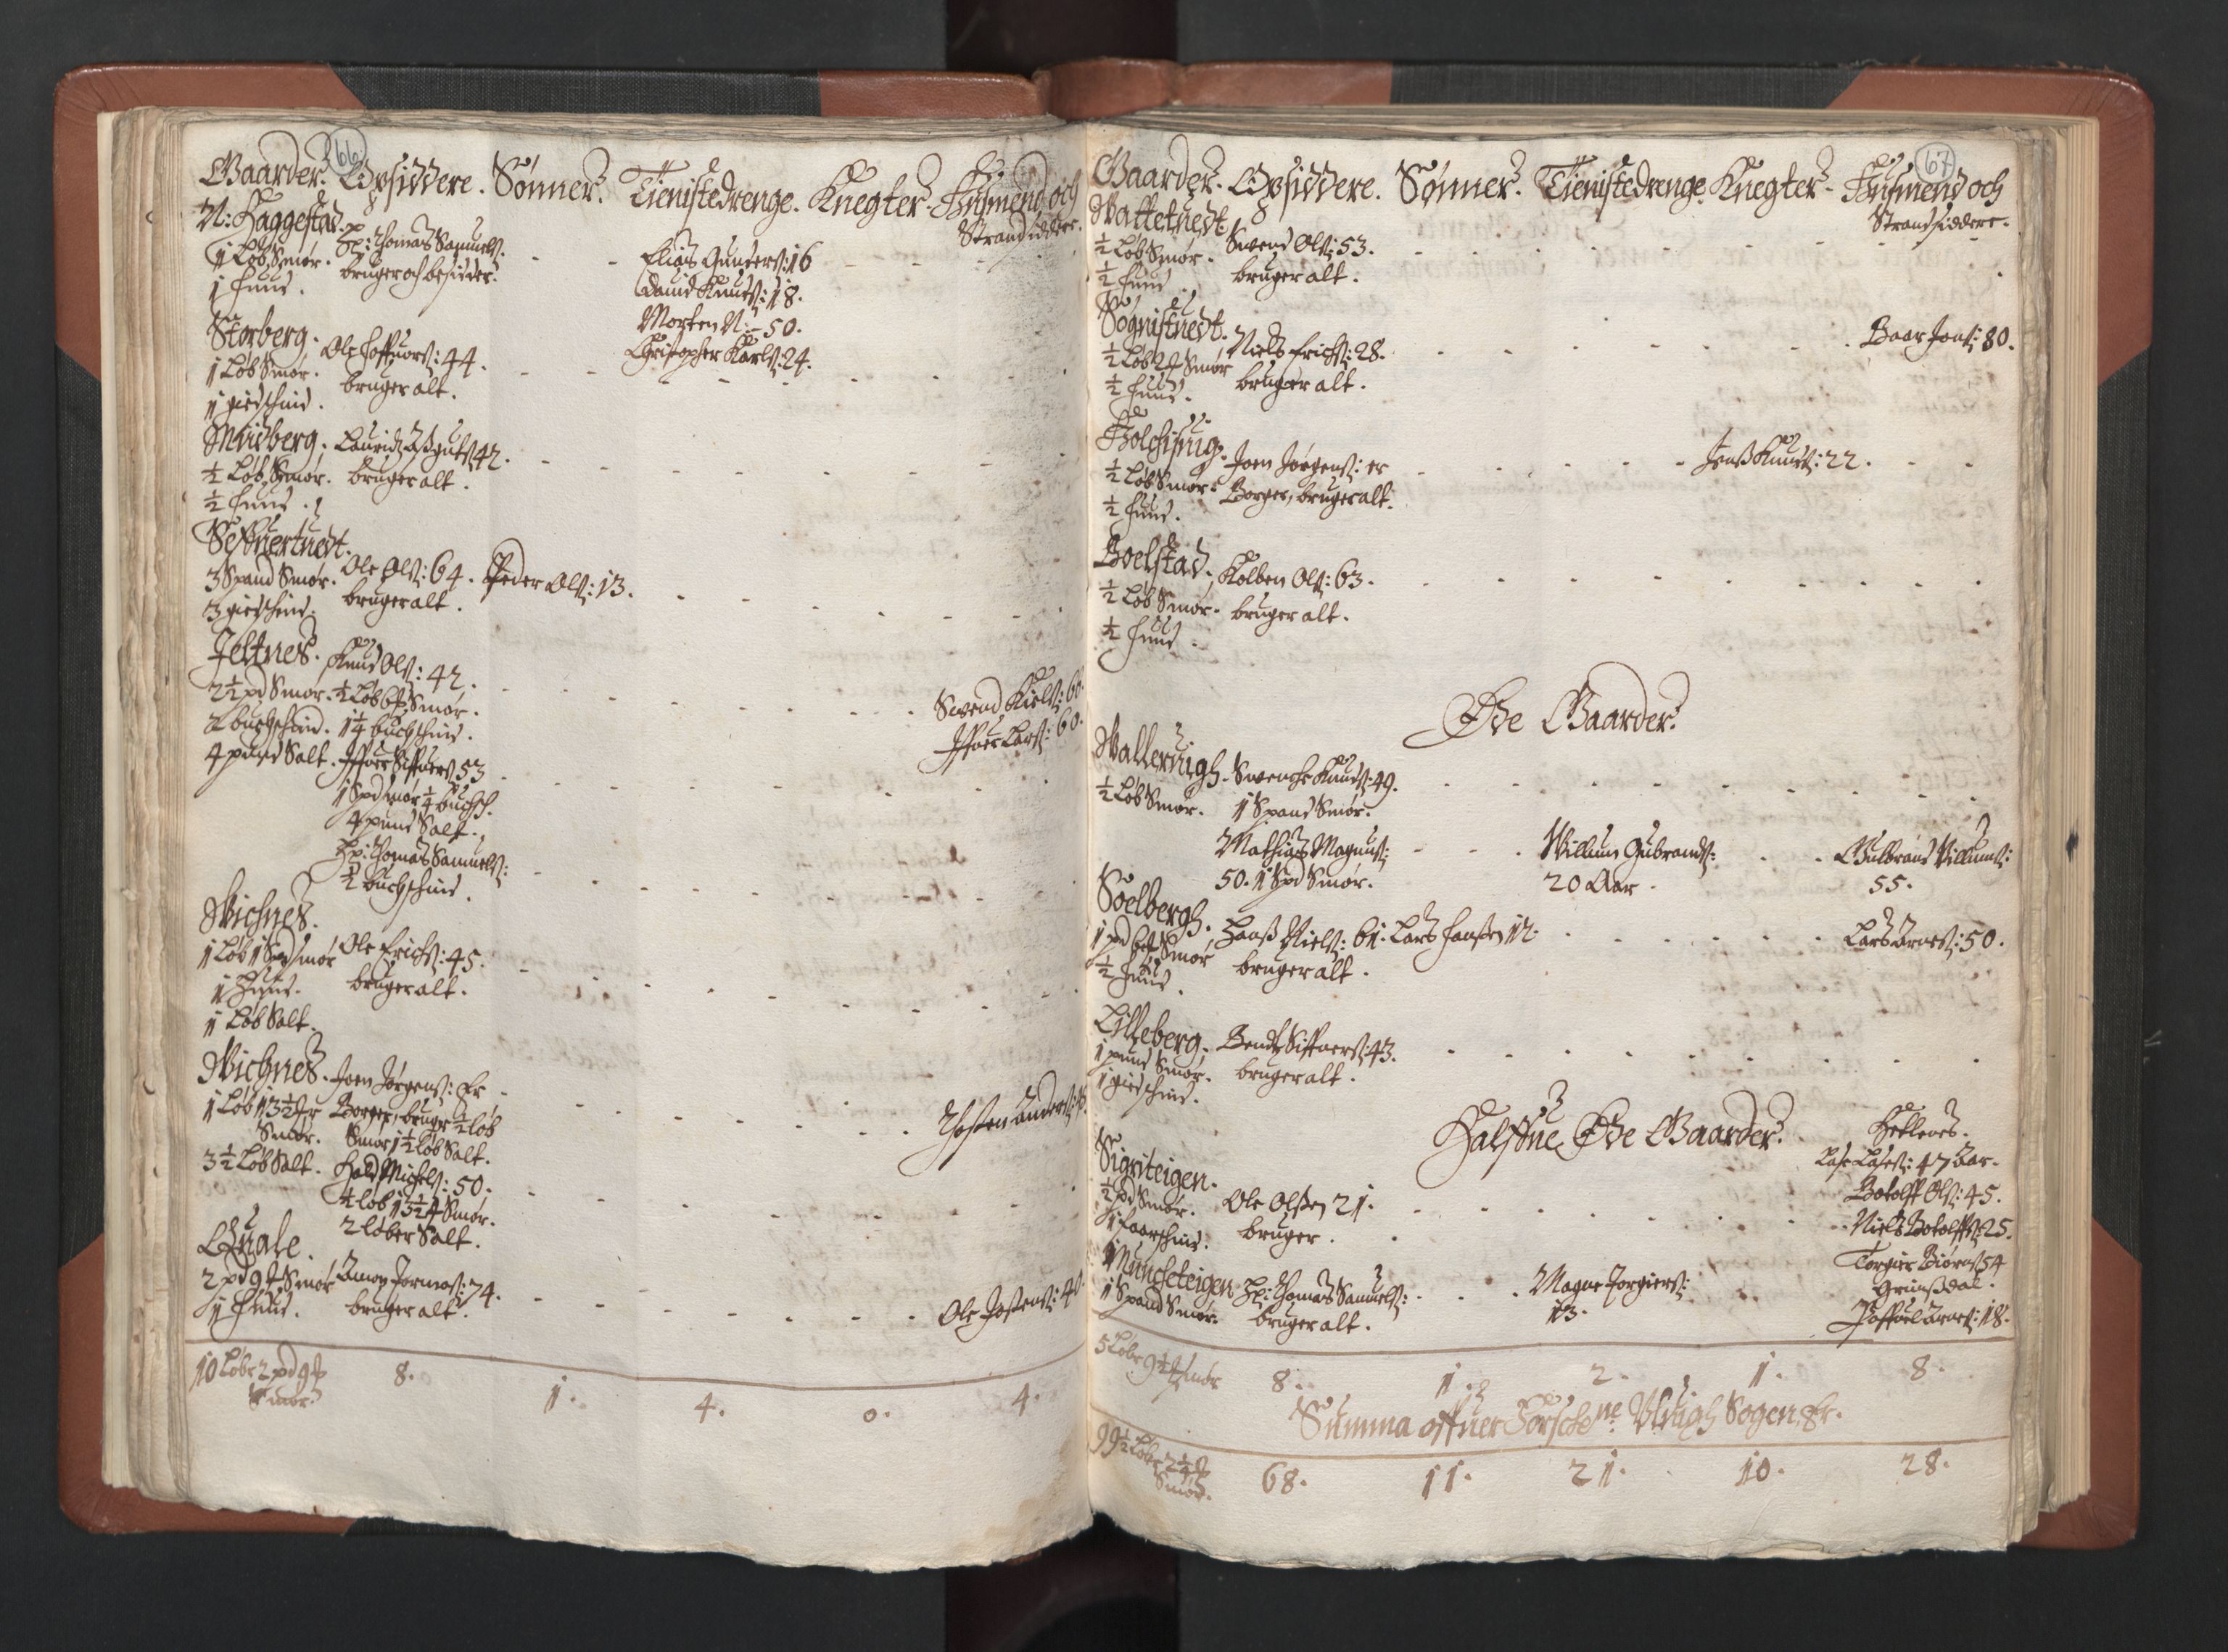 RA, Fogdenes og sorenskrivernes manntall 1664-1666, nr. 14: Hardanger len, Ytre Sogn fogderi og Indre Sogn fogderi, 1664-1665, s. 66-67